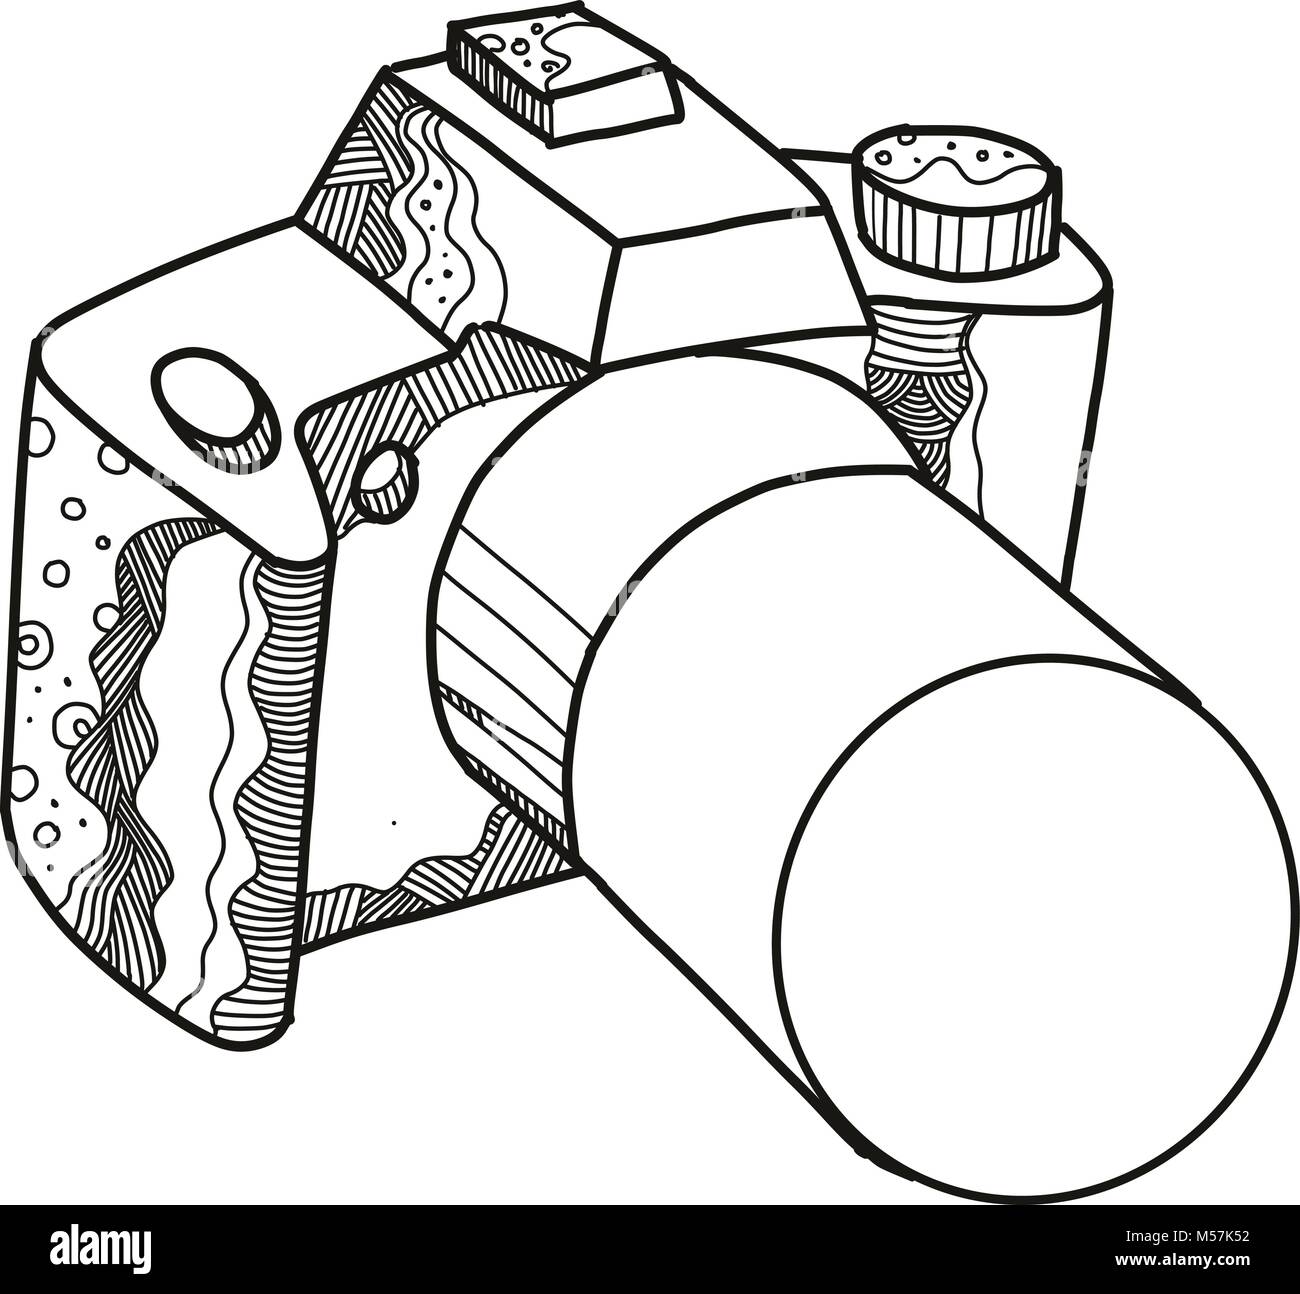 Doodle art Illustration einer DSLR-Kamera, digitalen Spiegelreflexkamera oder digitale Spiegelreflexkamera in Mandala Stil. Stock Vektor